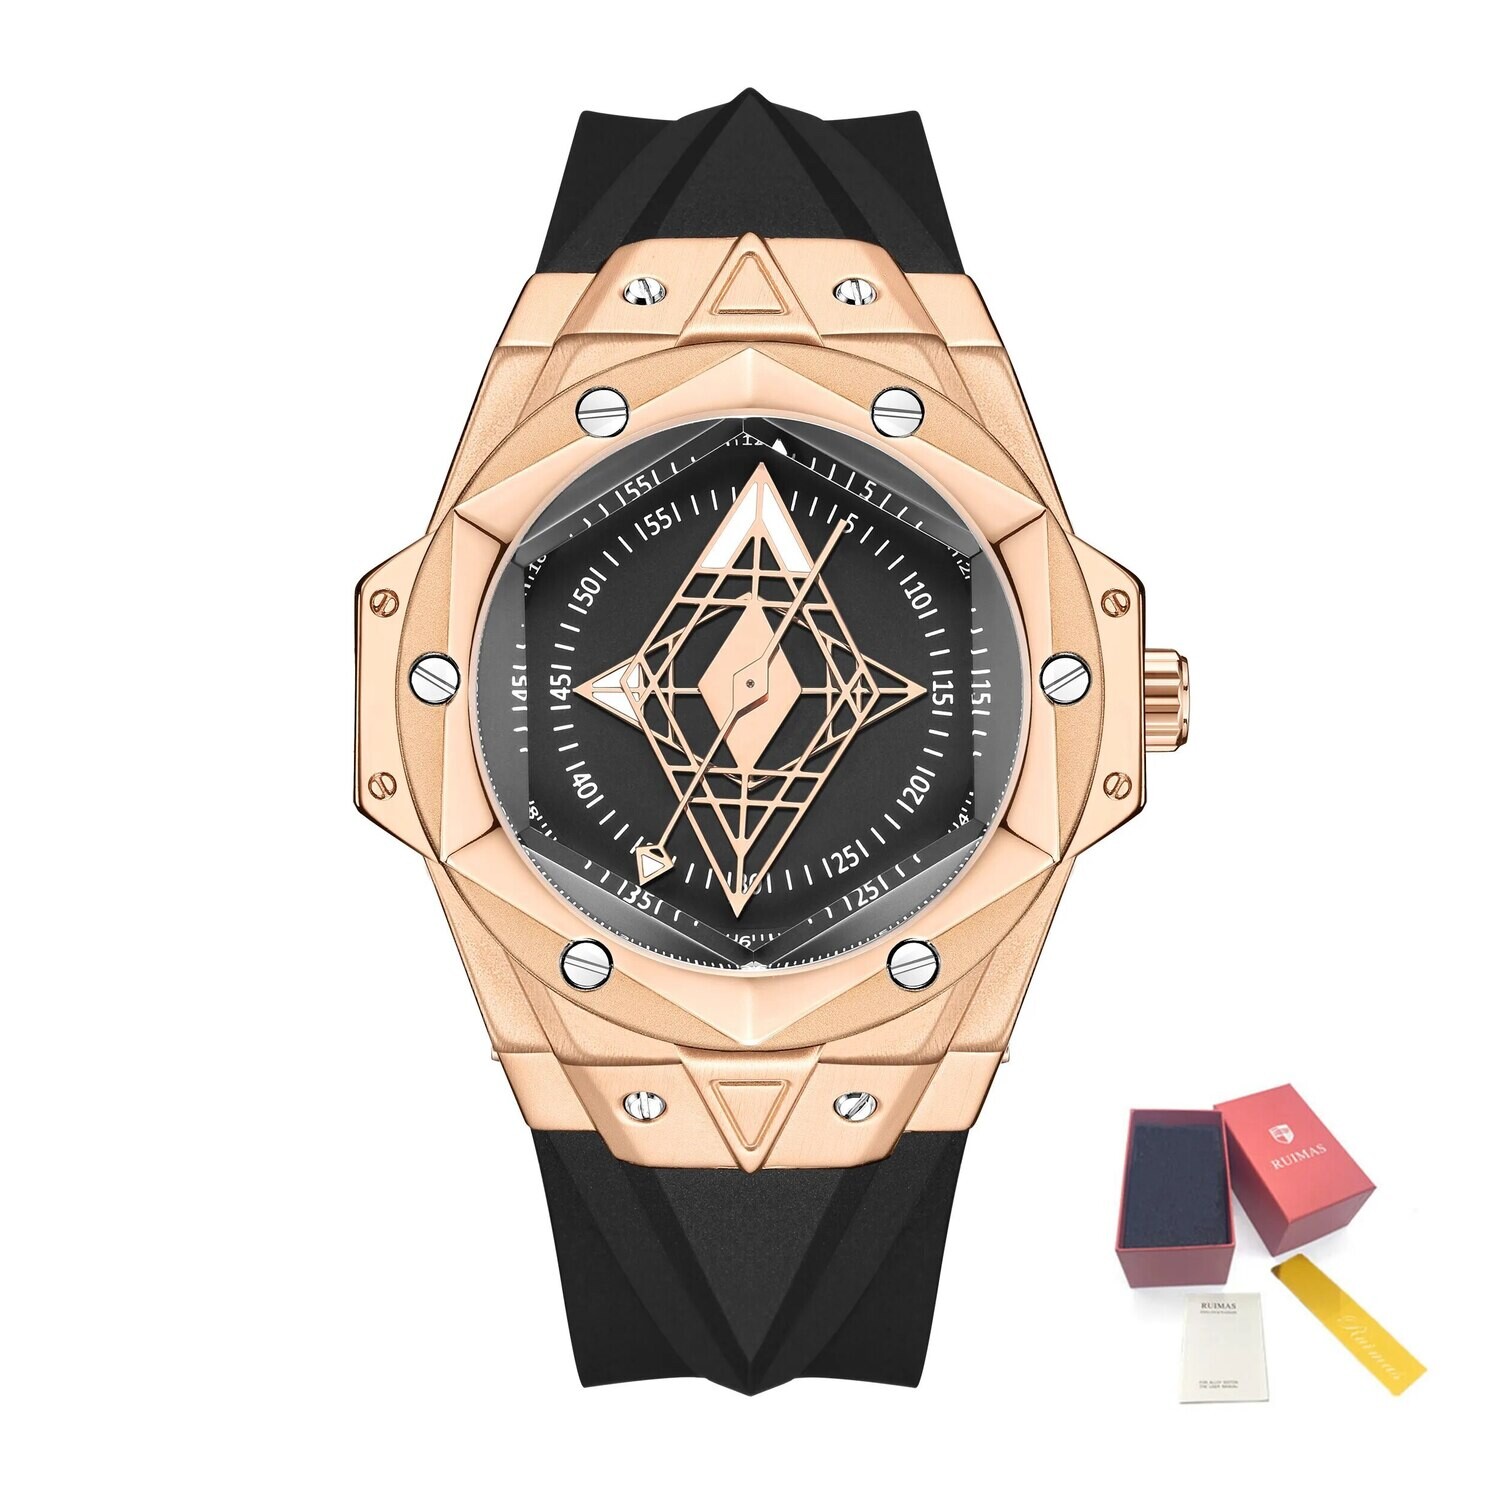 RUIMAS Brand Watches for Men Luxury Quartz Movement Sport Casual Wristwatches Unique Design Waterproof Clock Relogio Masculino, Color: Rose